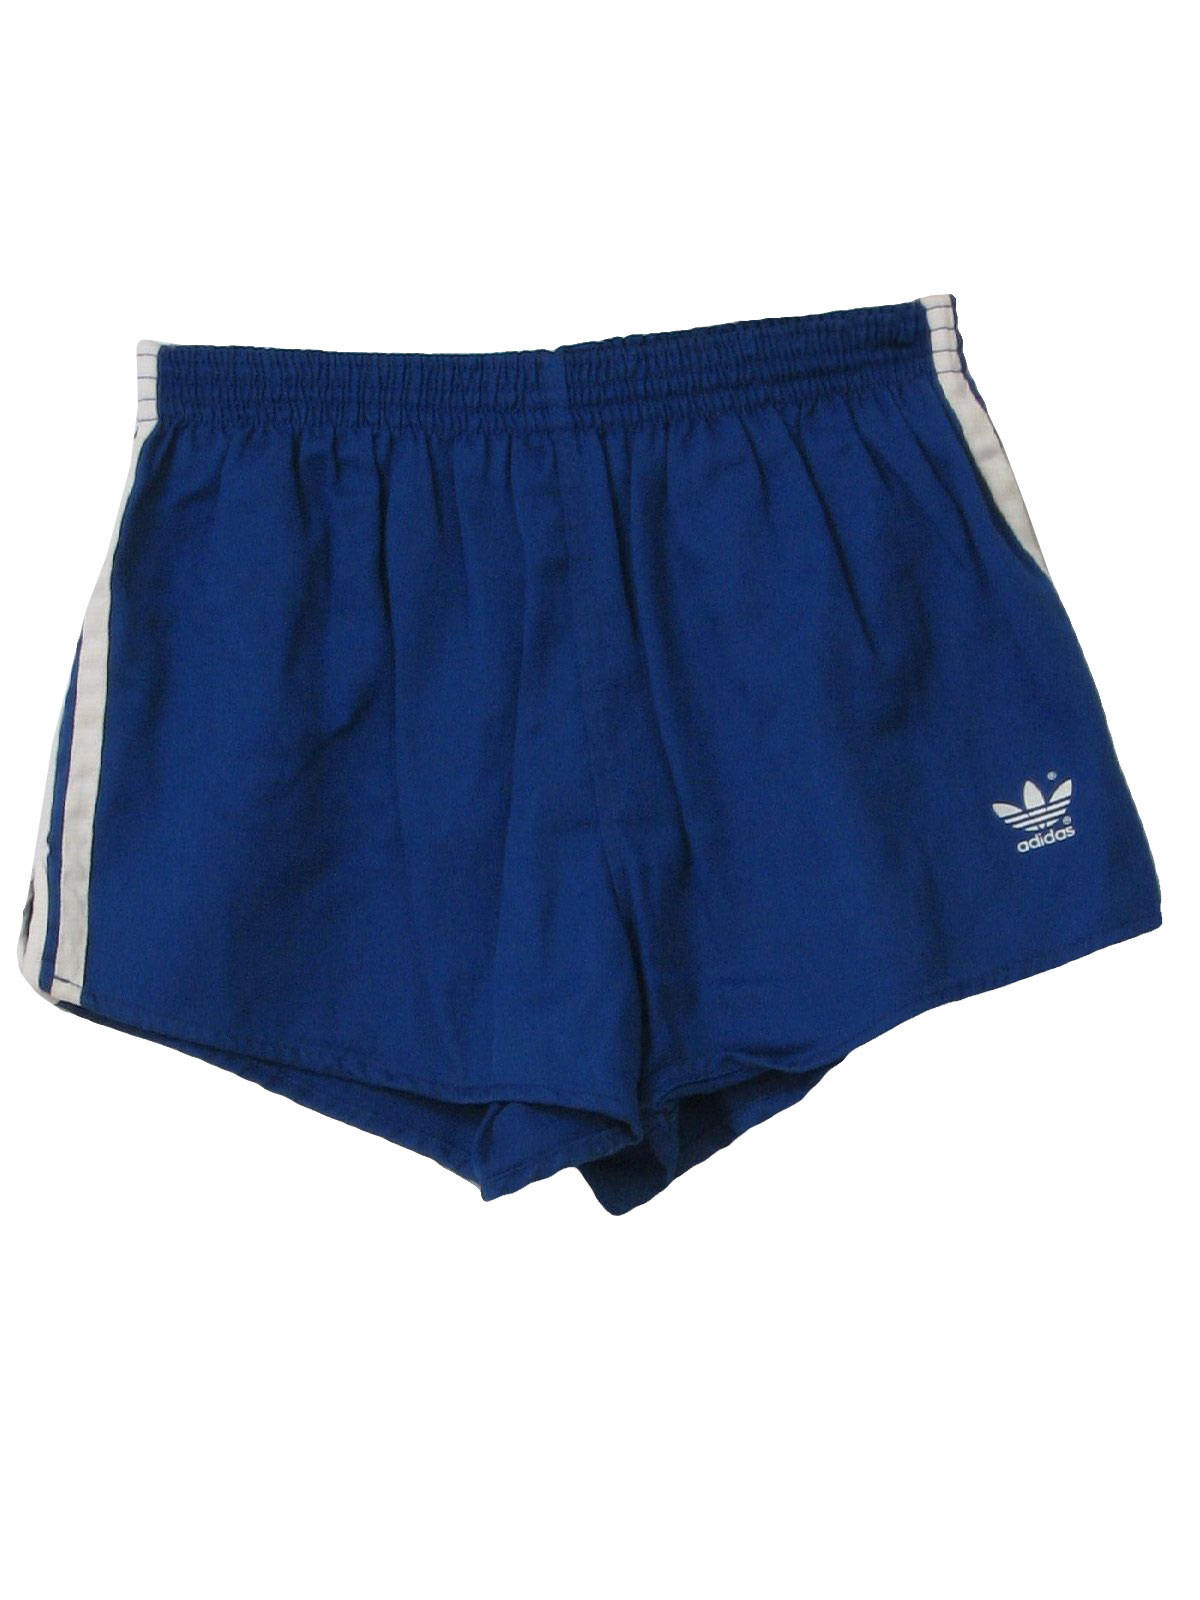 1980's Shorts (Adidas): 80s -Adidas- Mens royal blue and white side ...